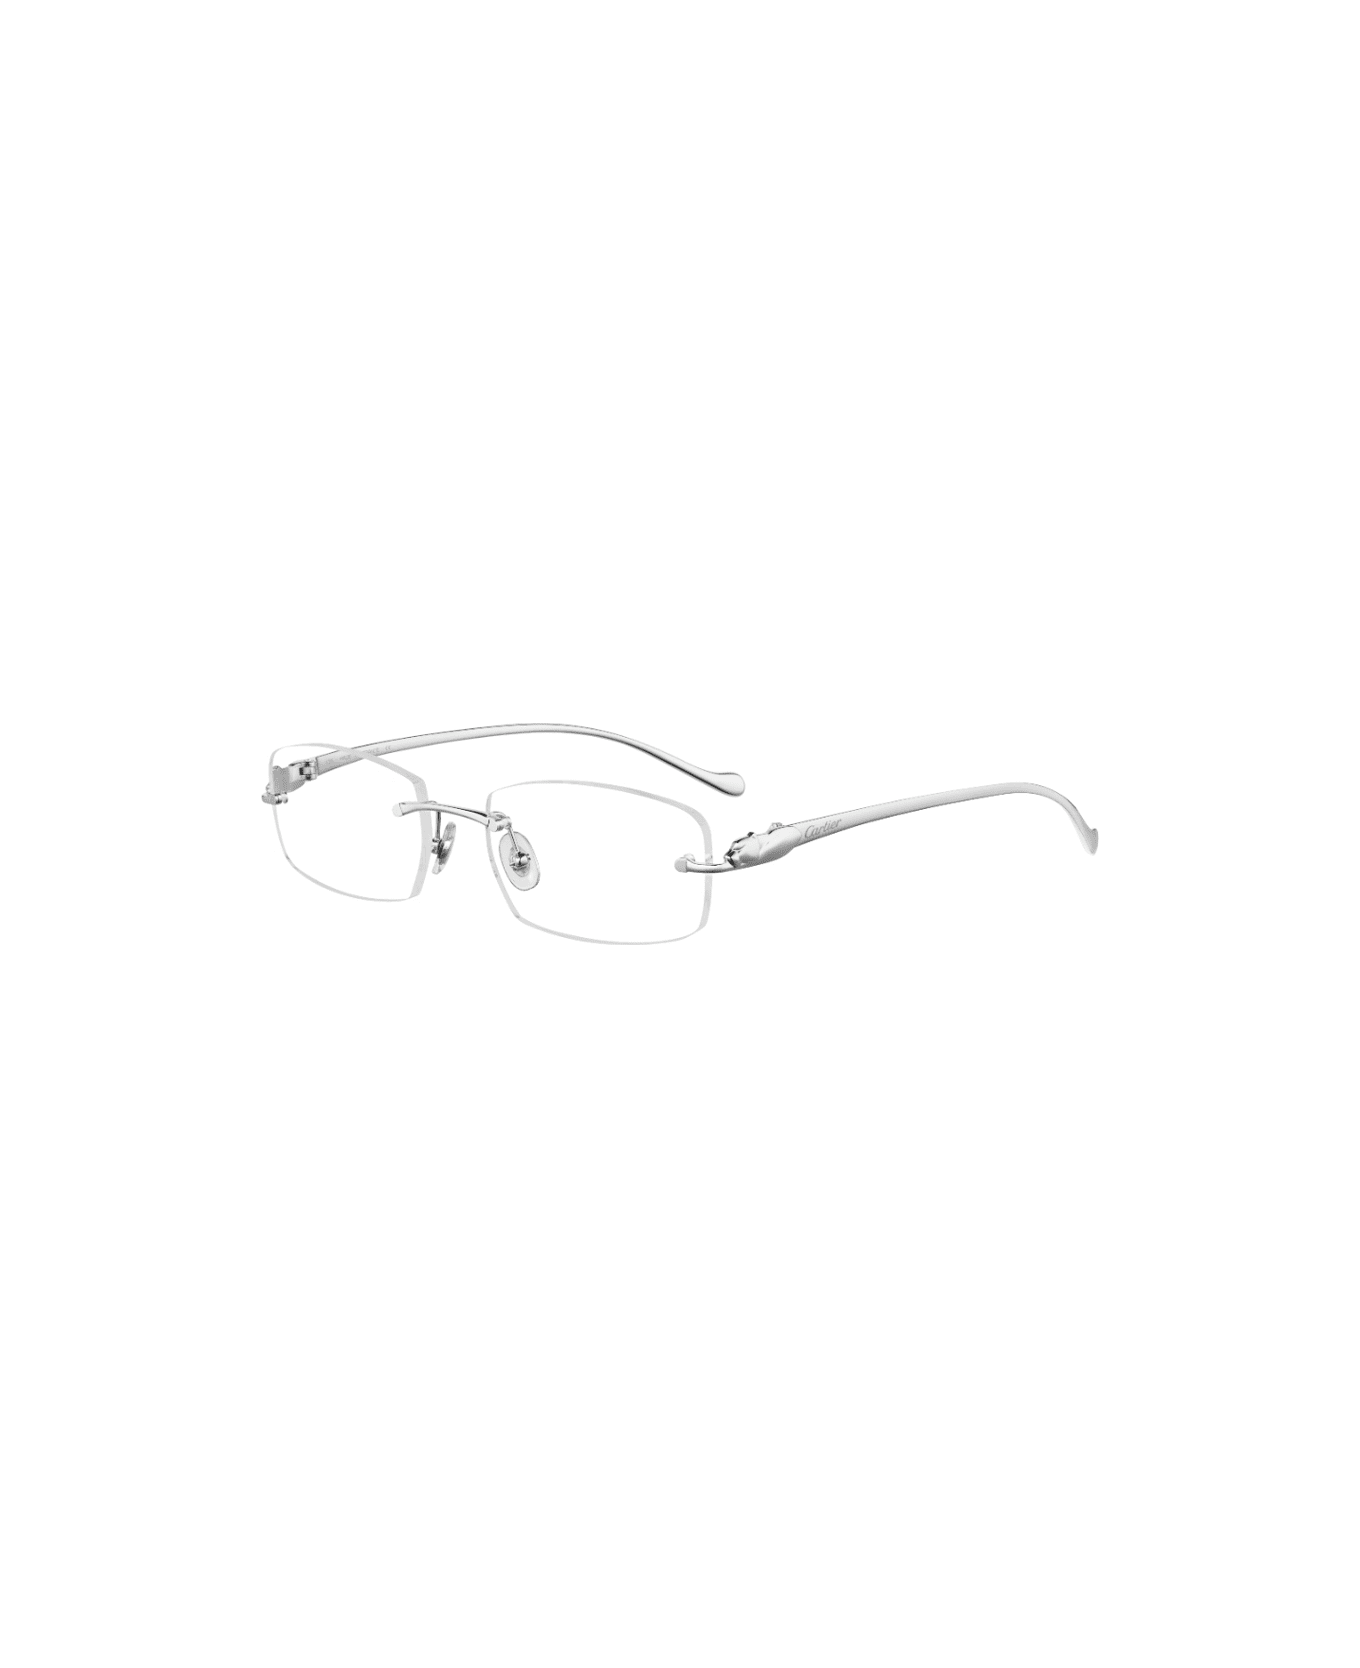 Cartier Eyewear CT0061-003 Glasses - Silver